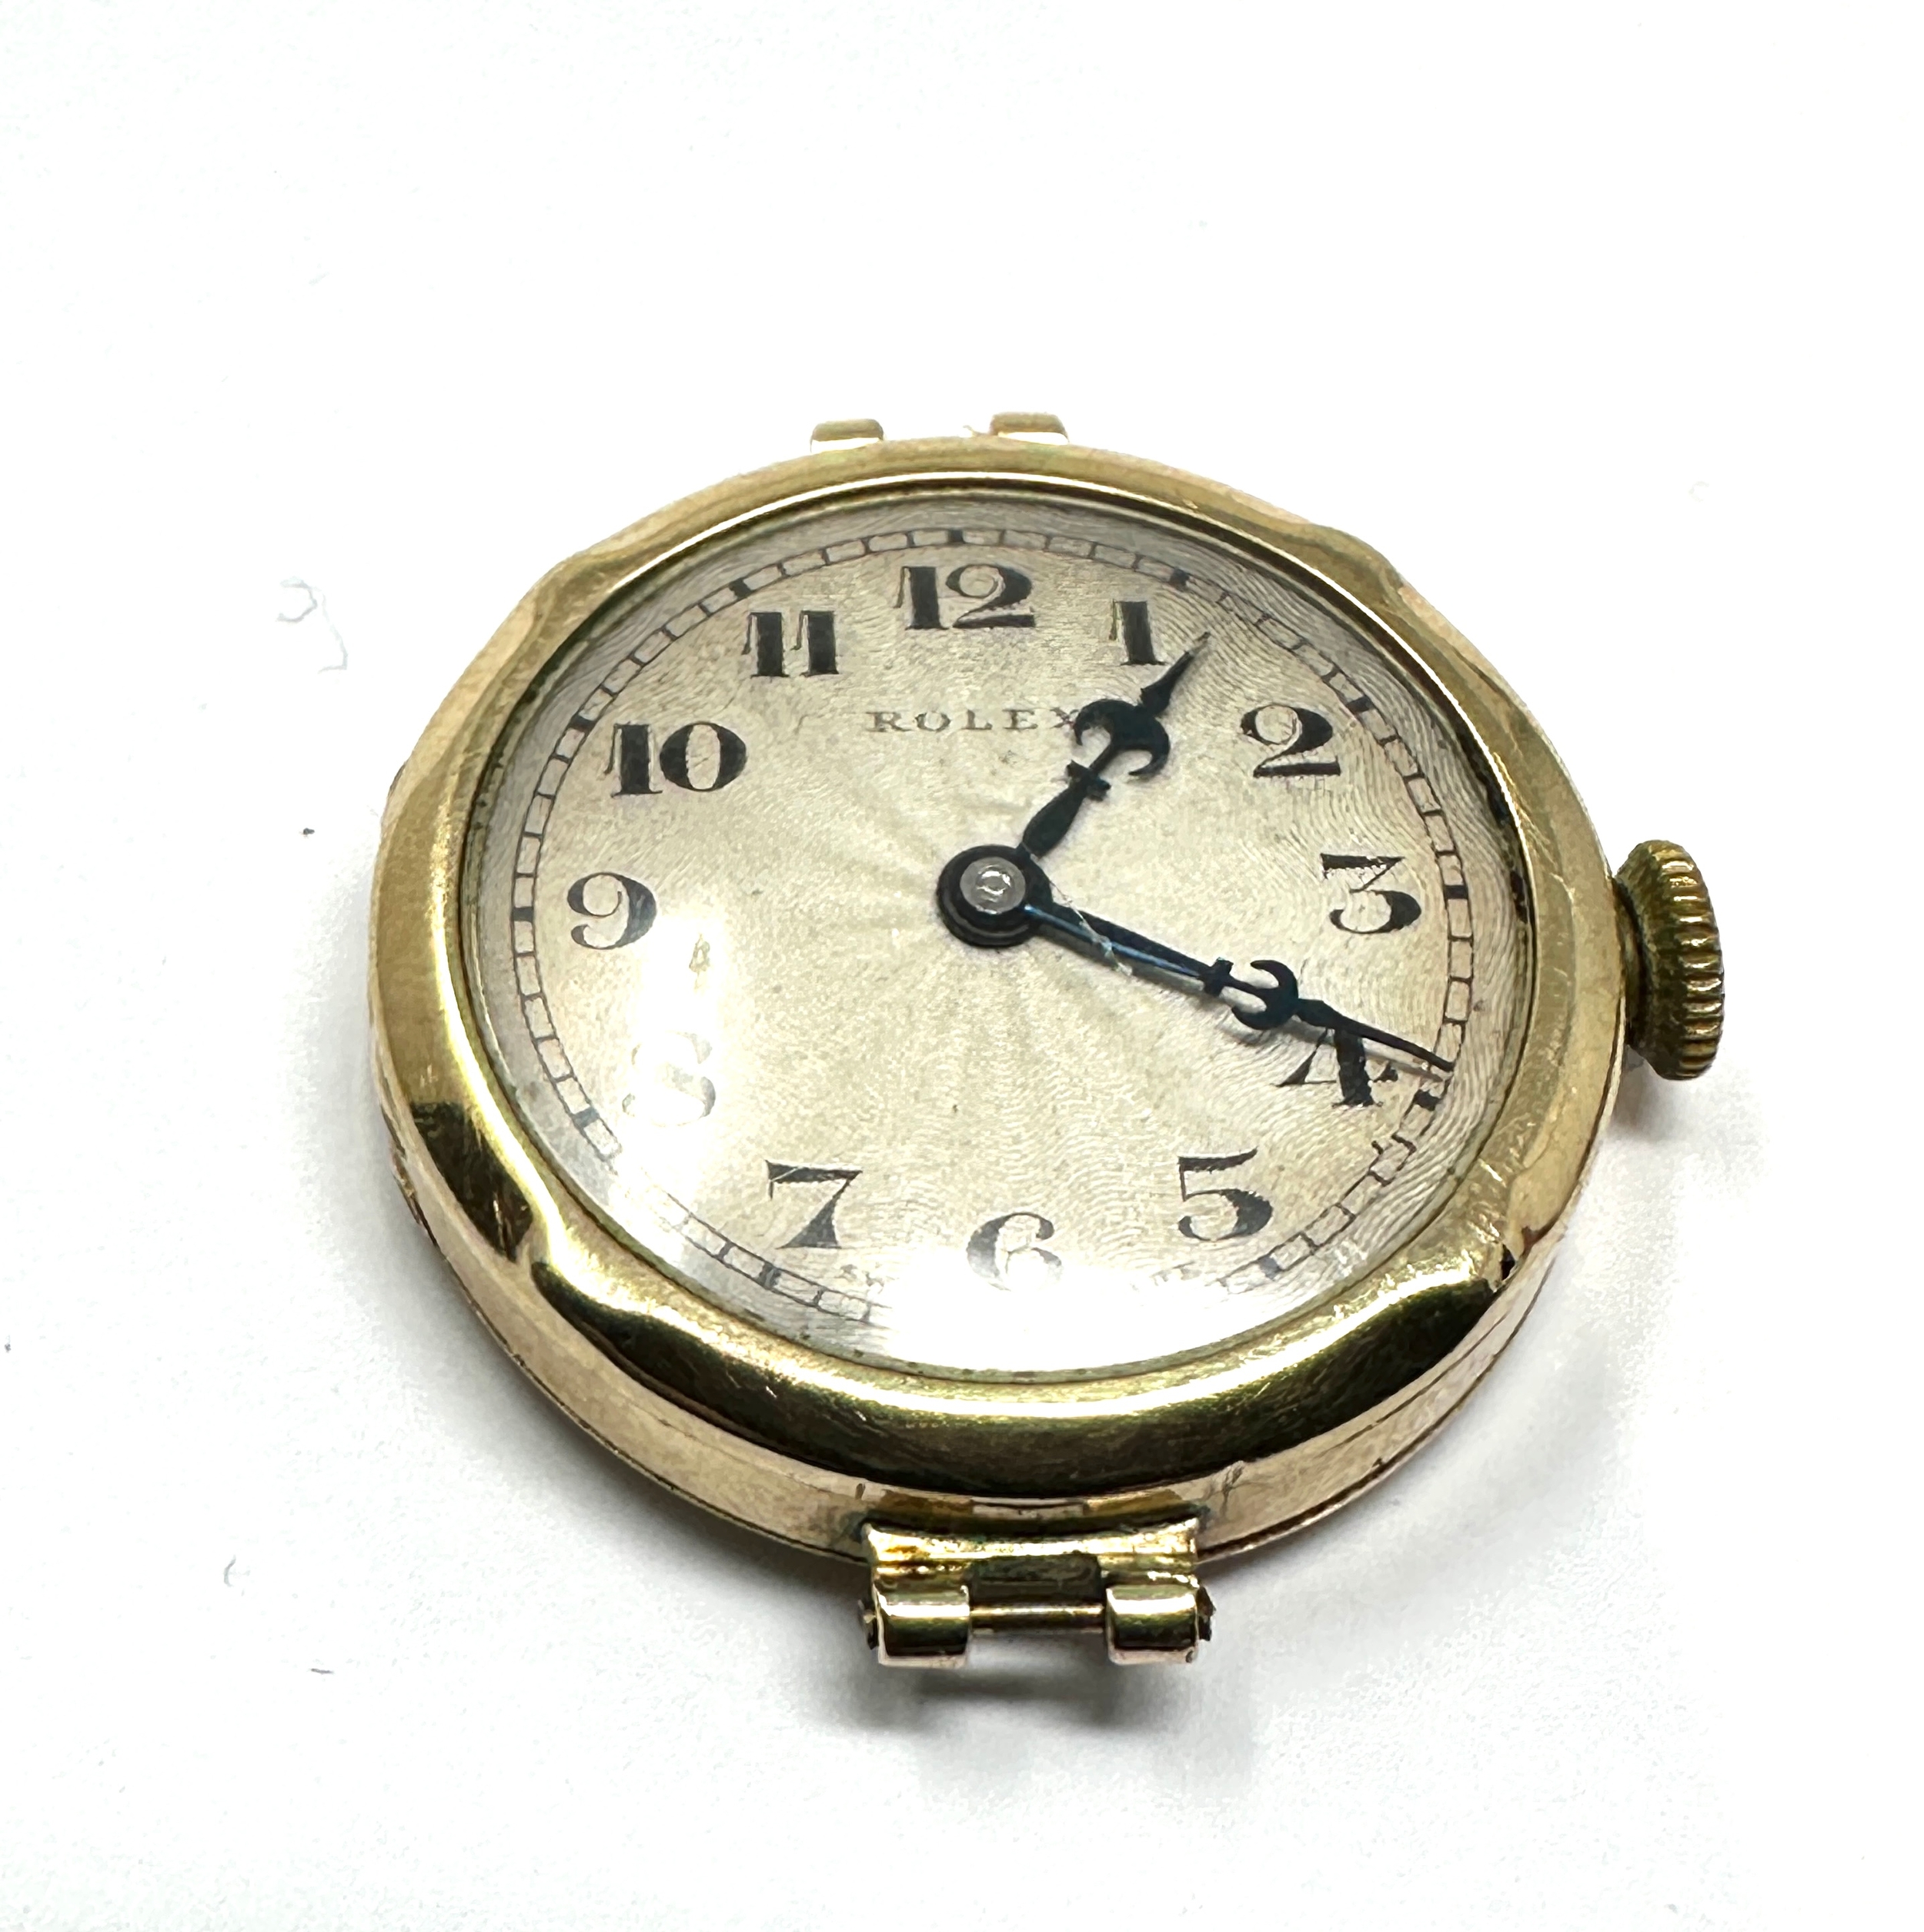 1930s Ladies 9ct gold rolex wristwatch the watch is ticking